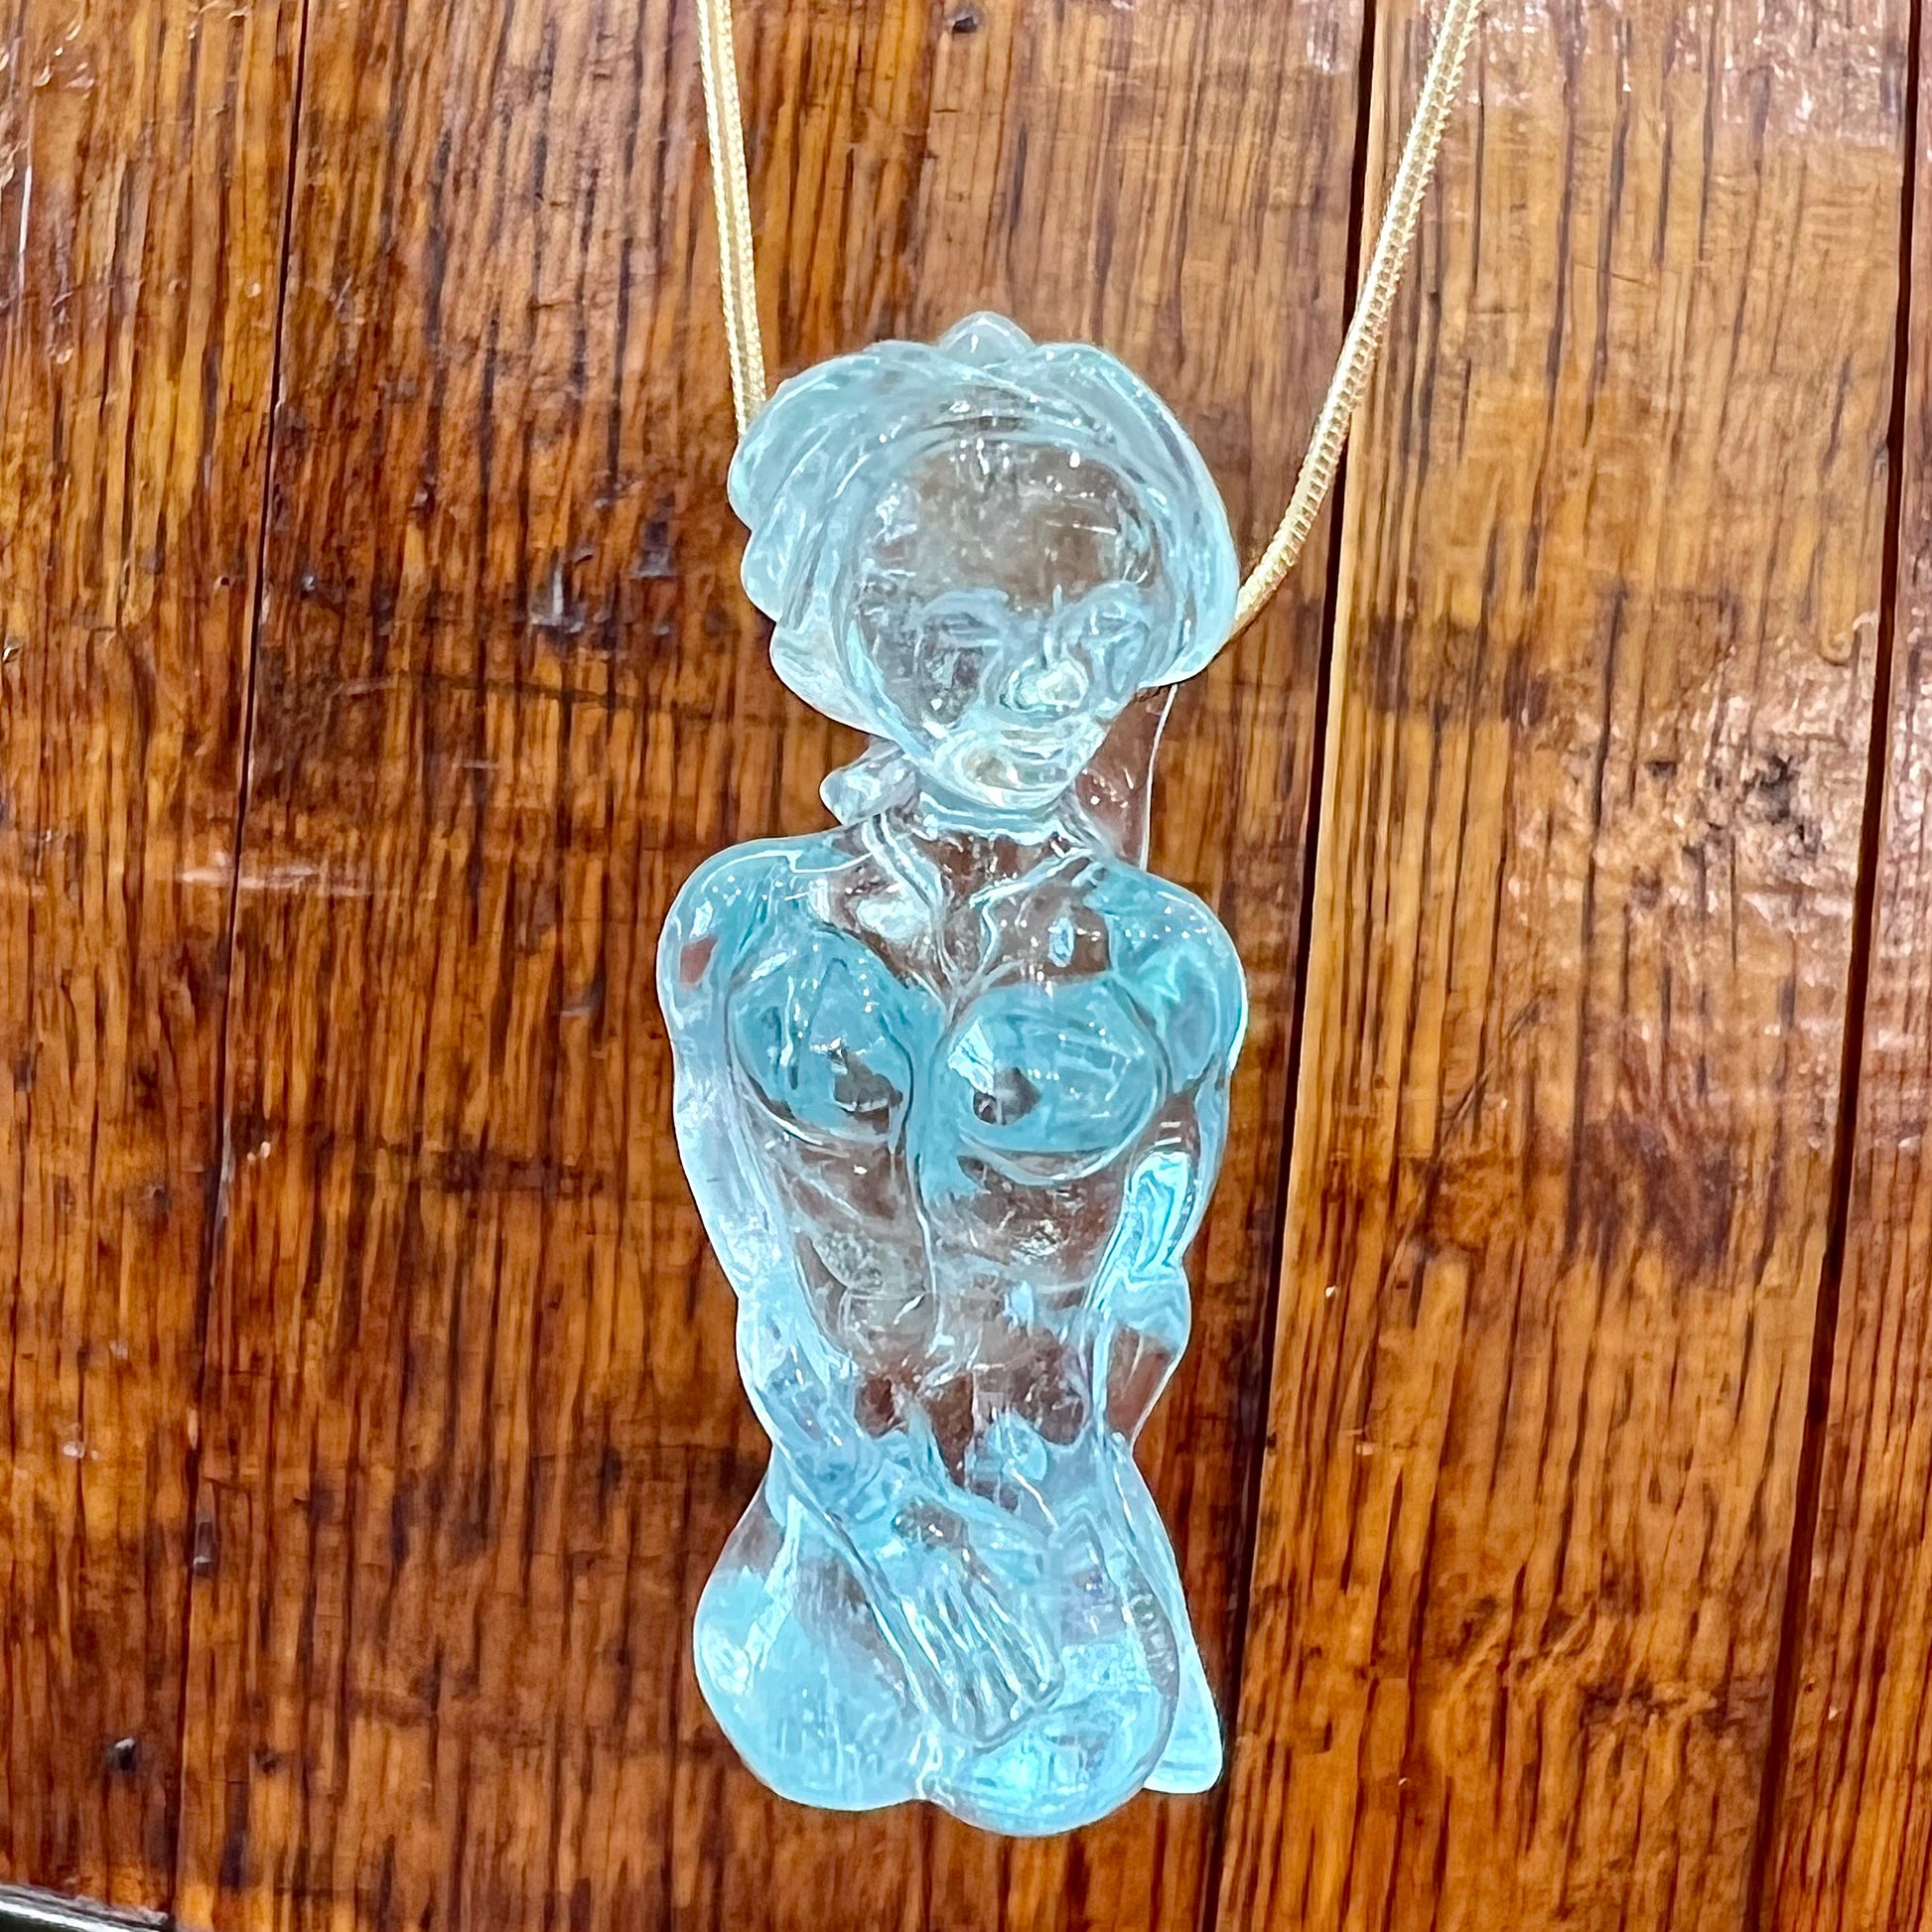 A stone woman figure carved from a blue aquamarine crystal.  The piece resembles Venus Gummi de Milo.